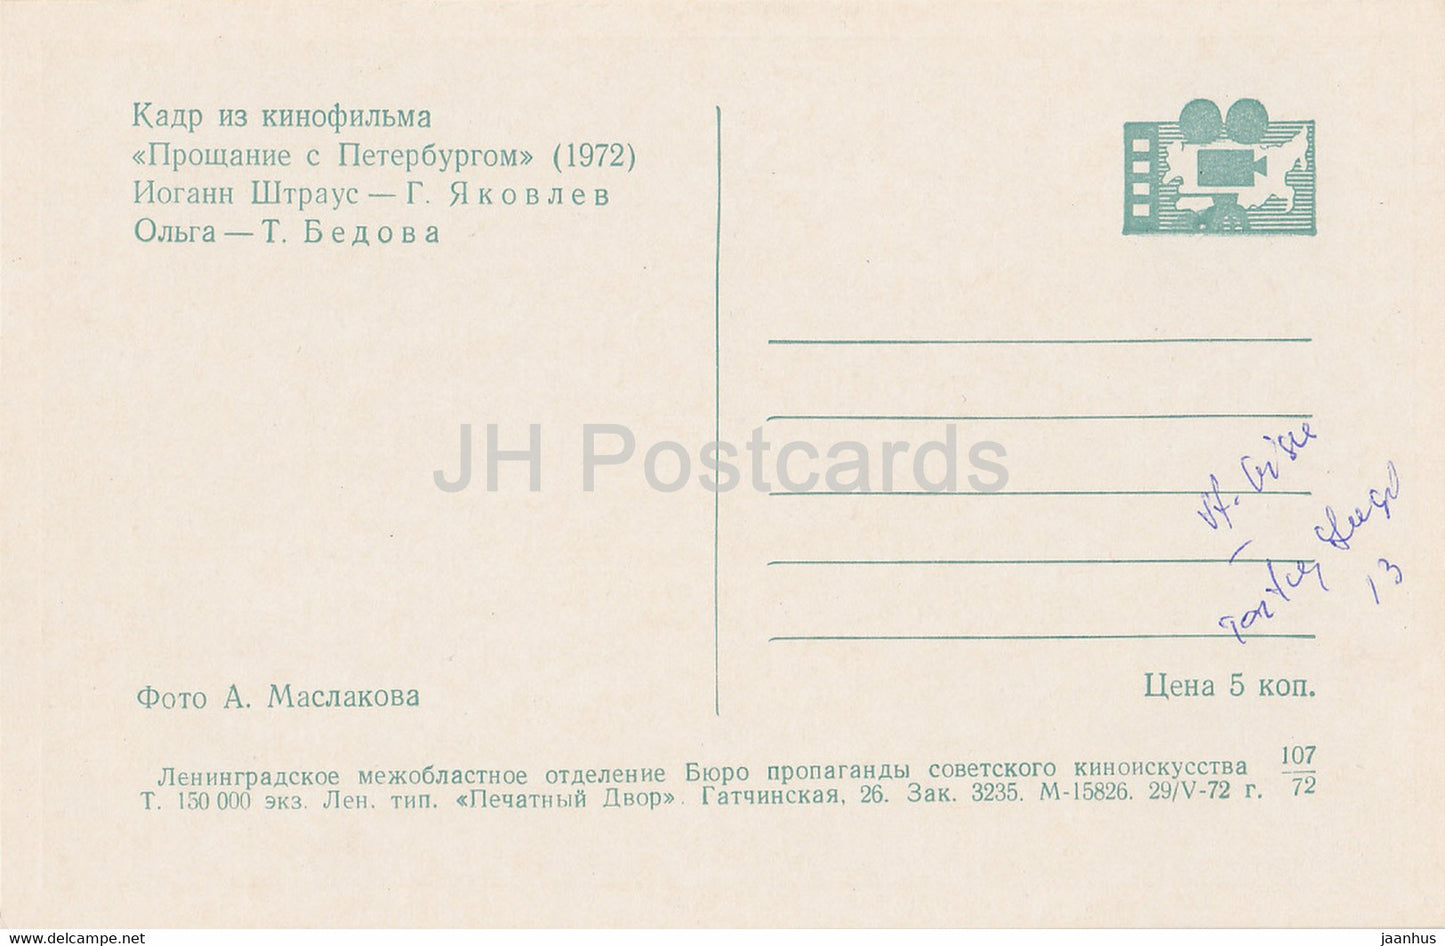 Farewell to St. Petersburg - actress T. Bedova actor G. Yakovlev - Movie - Film - soviet - 1972 - Russia USSR - unused